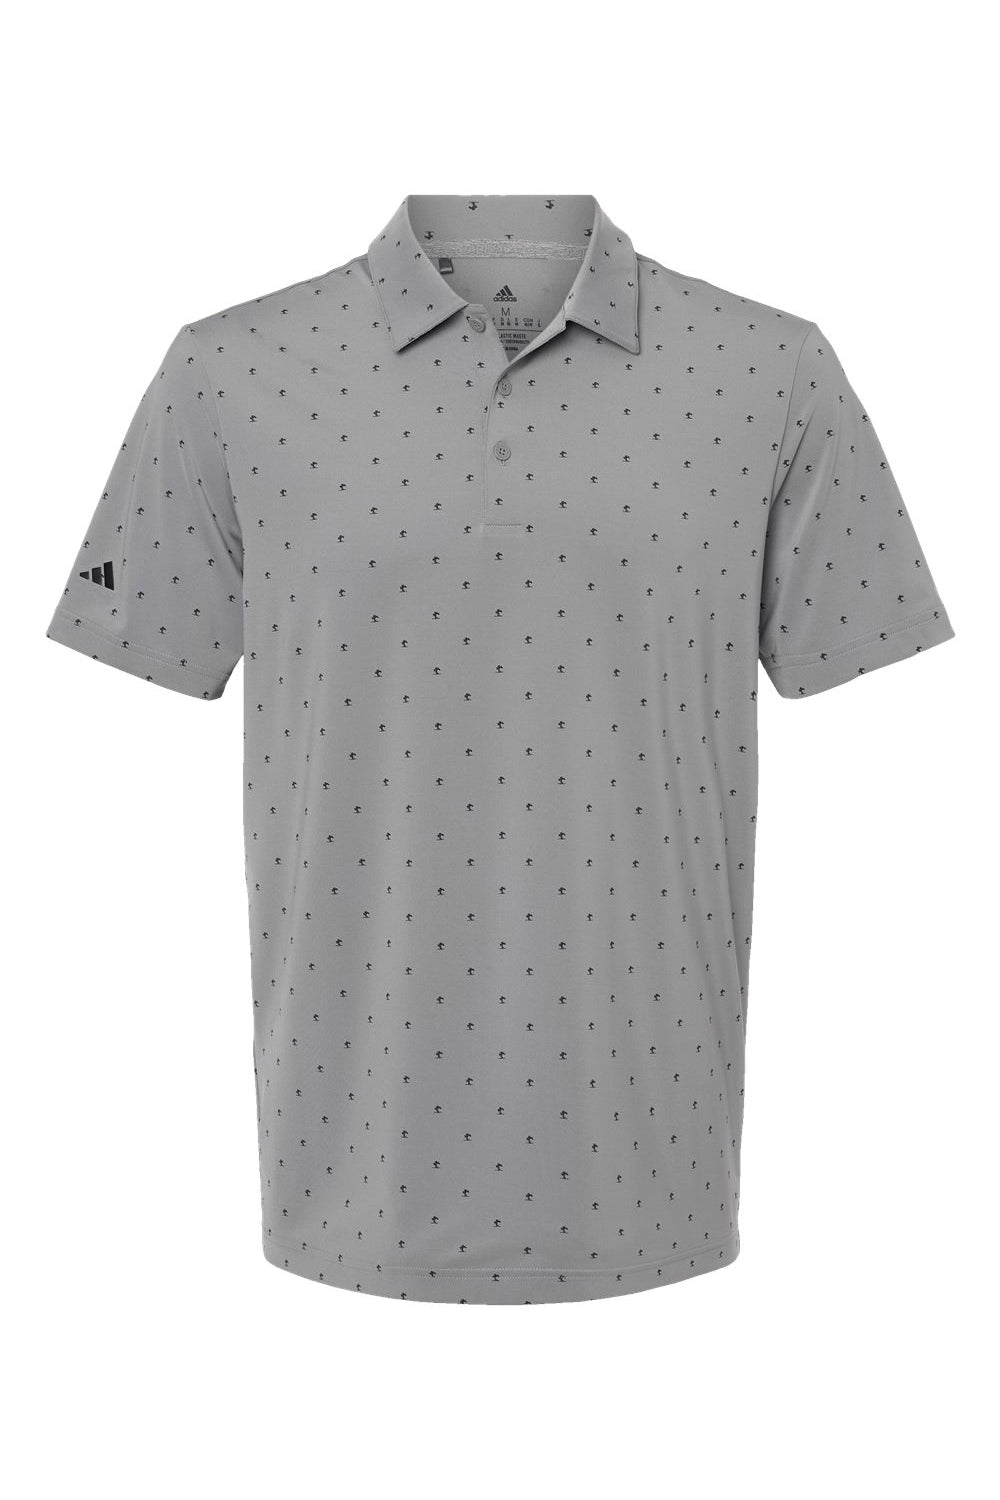 Adidas A574 Mens Pine Tree Short Sleeve Polo Shirt Grey/Black Flat Front